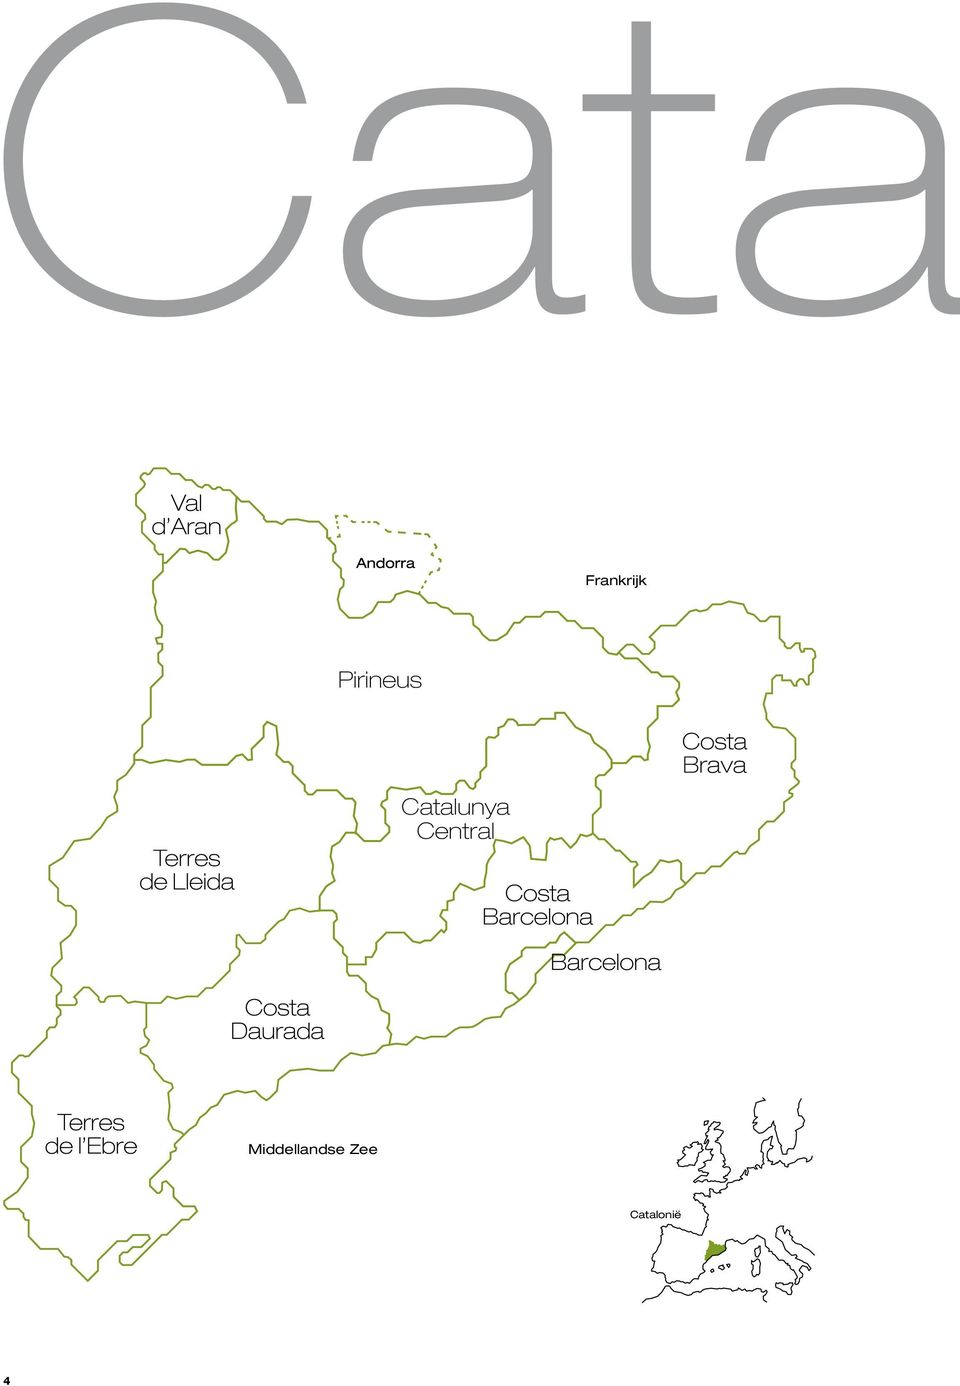 Catalunya Central